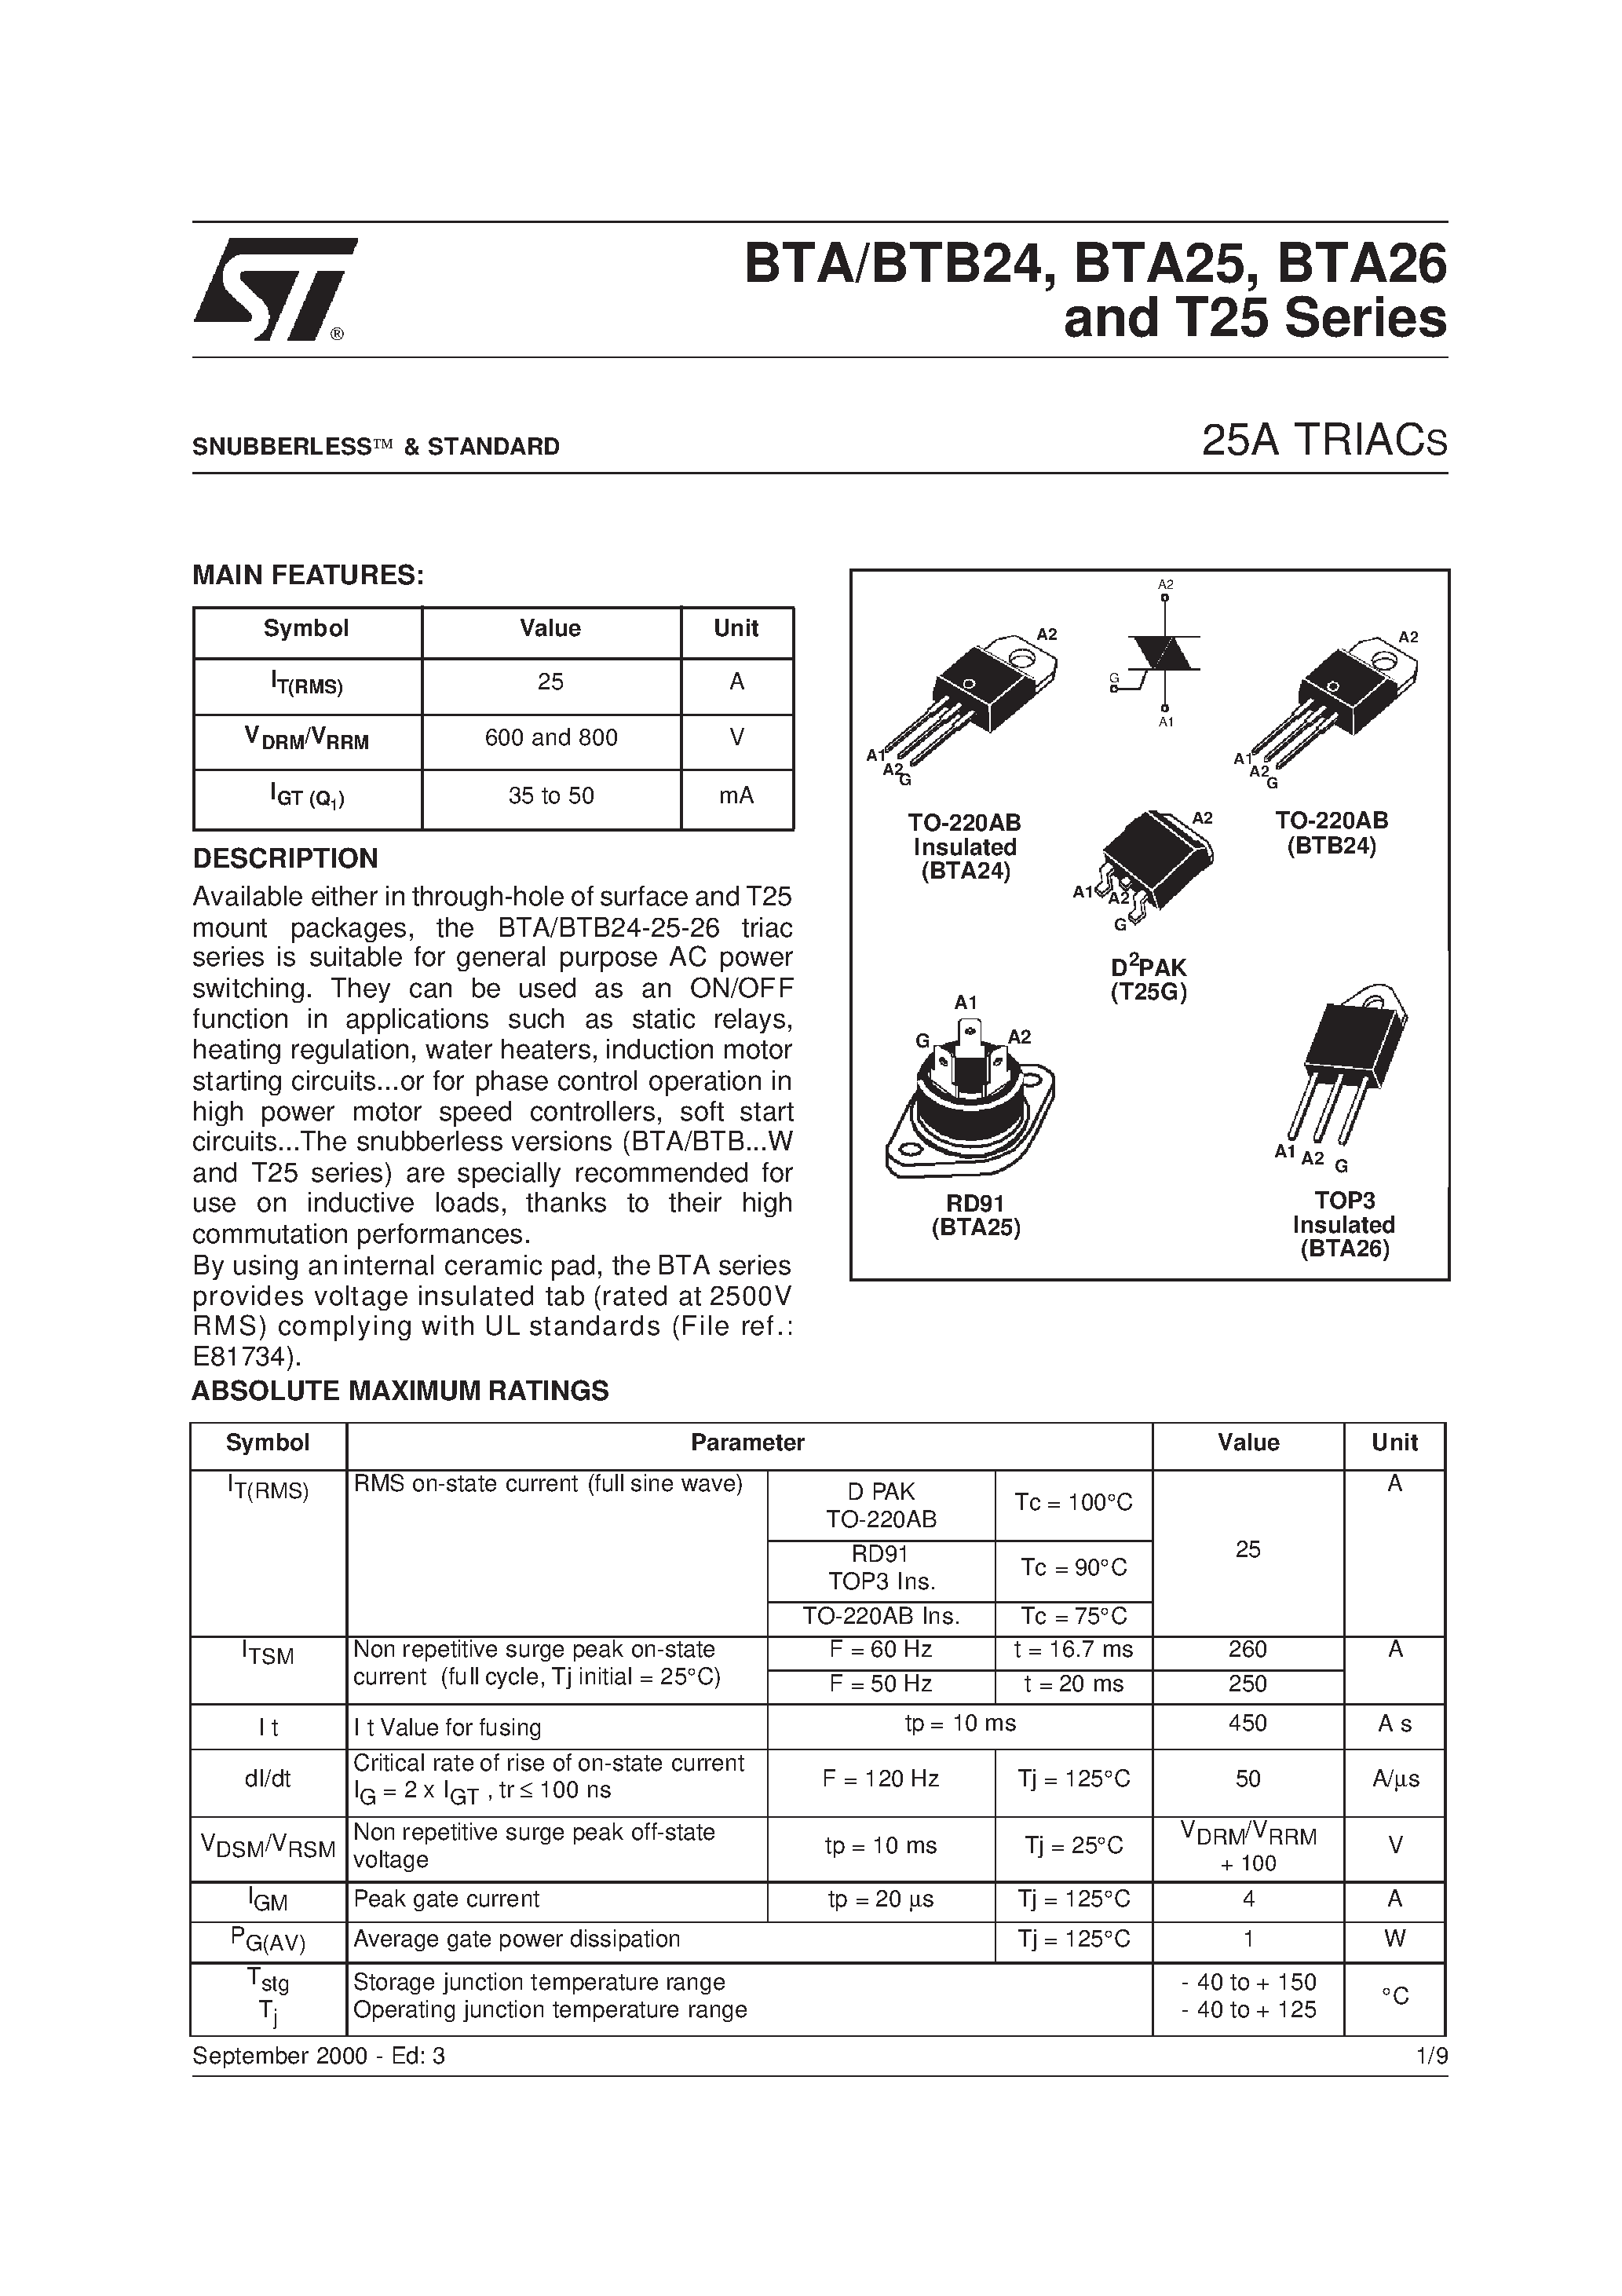 Datasheet BTA26-600BW - 25A TRIACS page 1